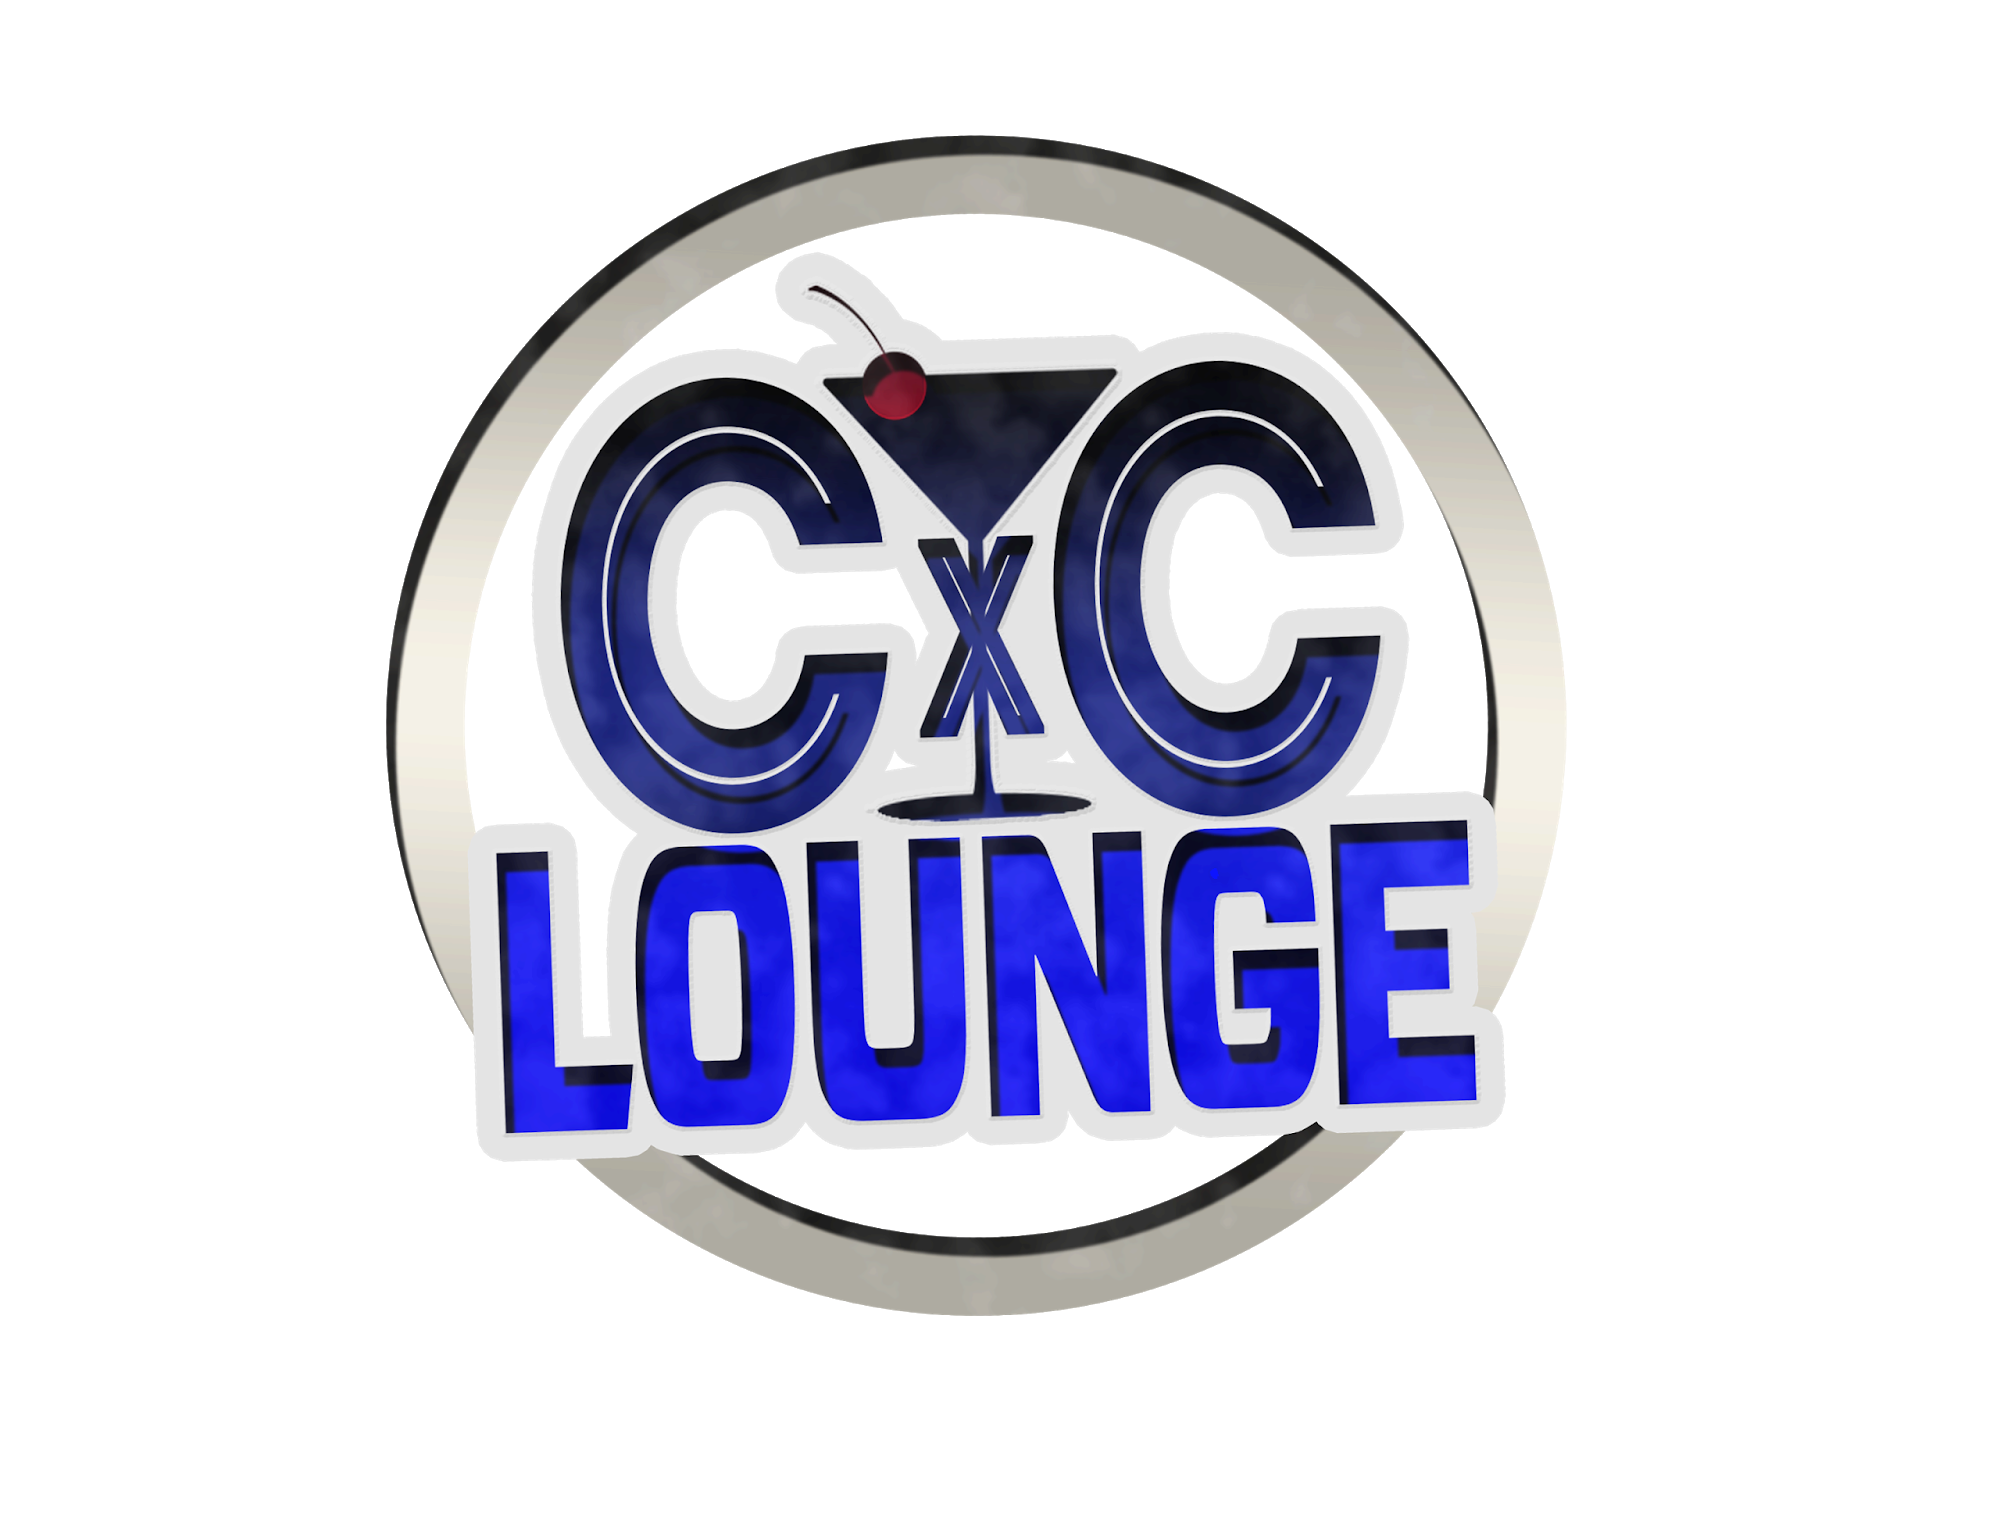 C&C Bar and lounge